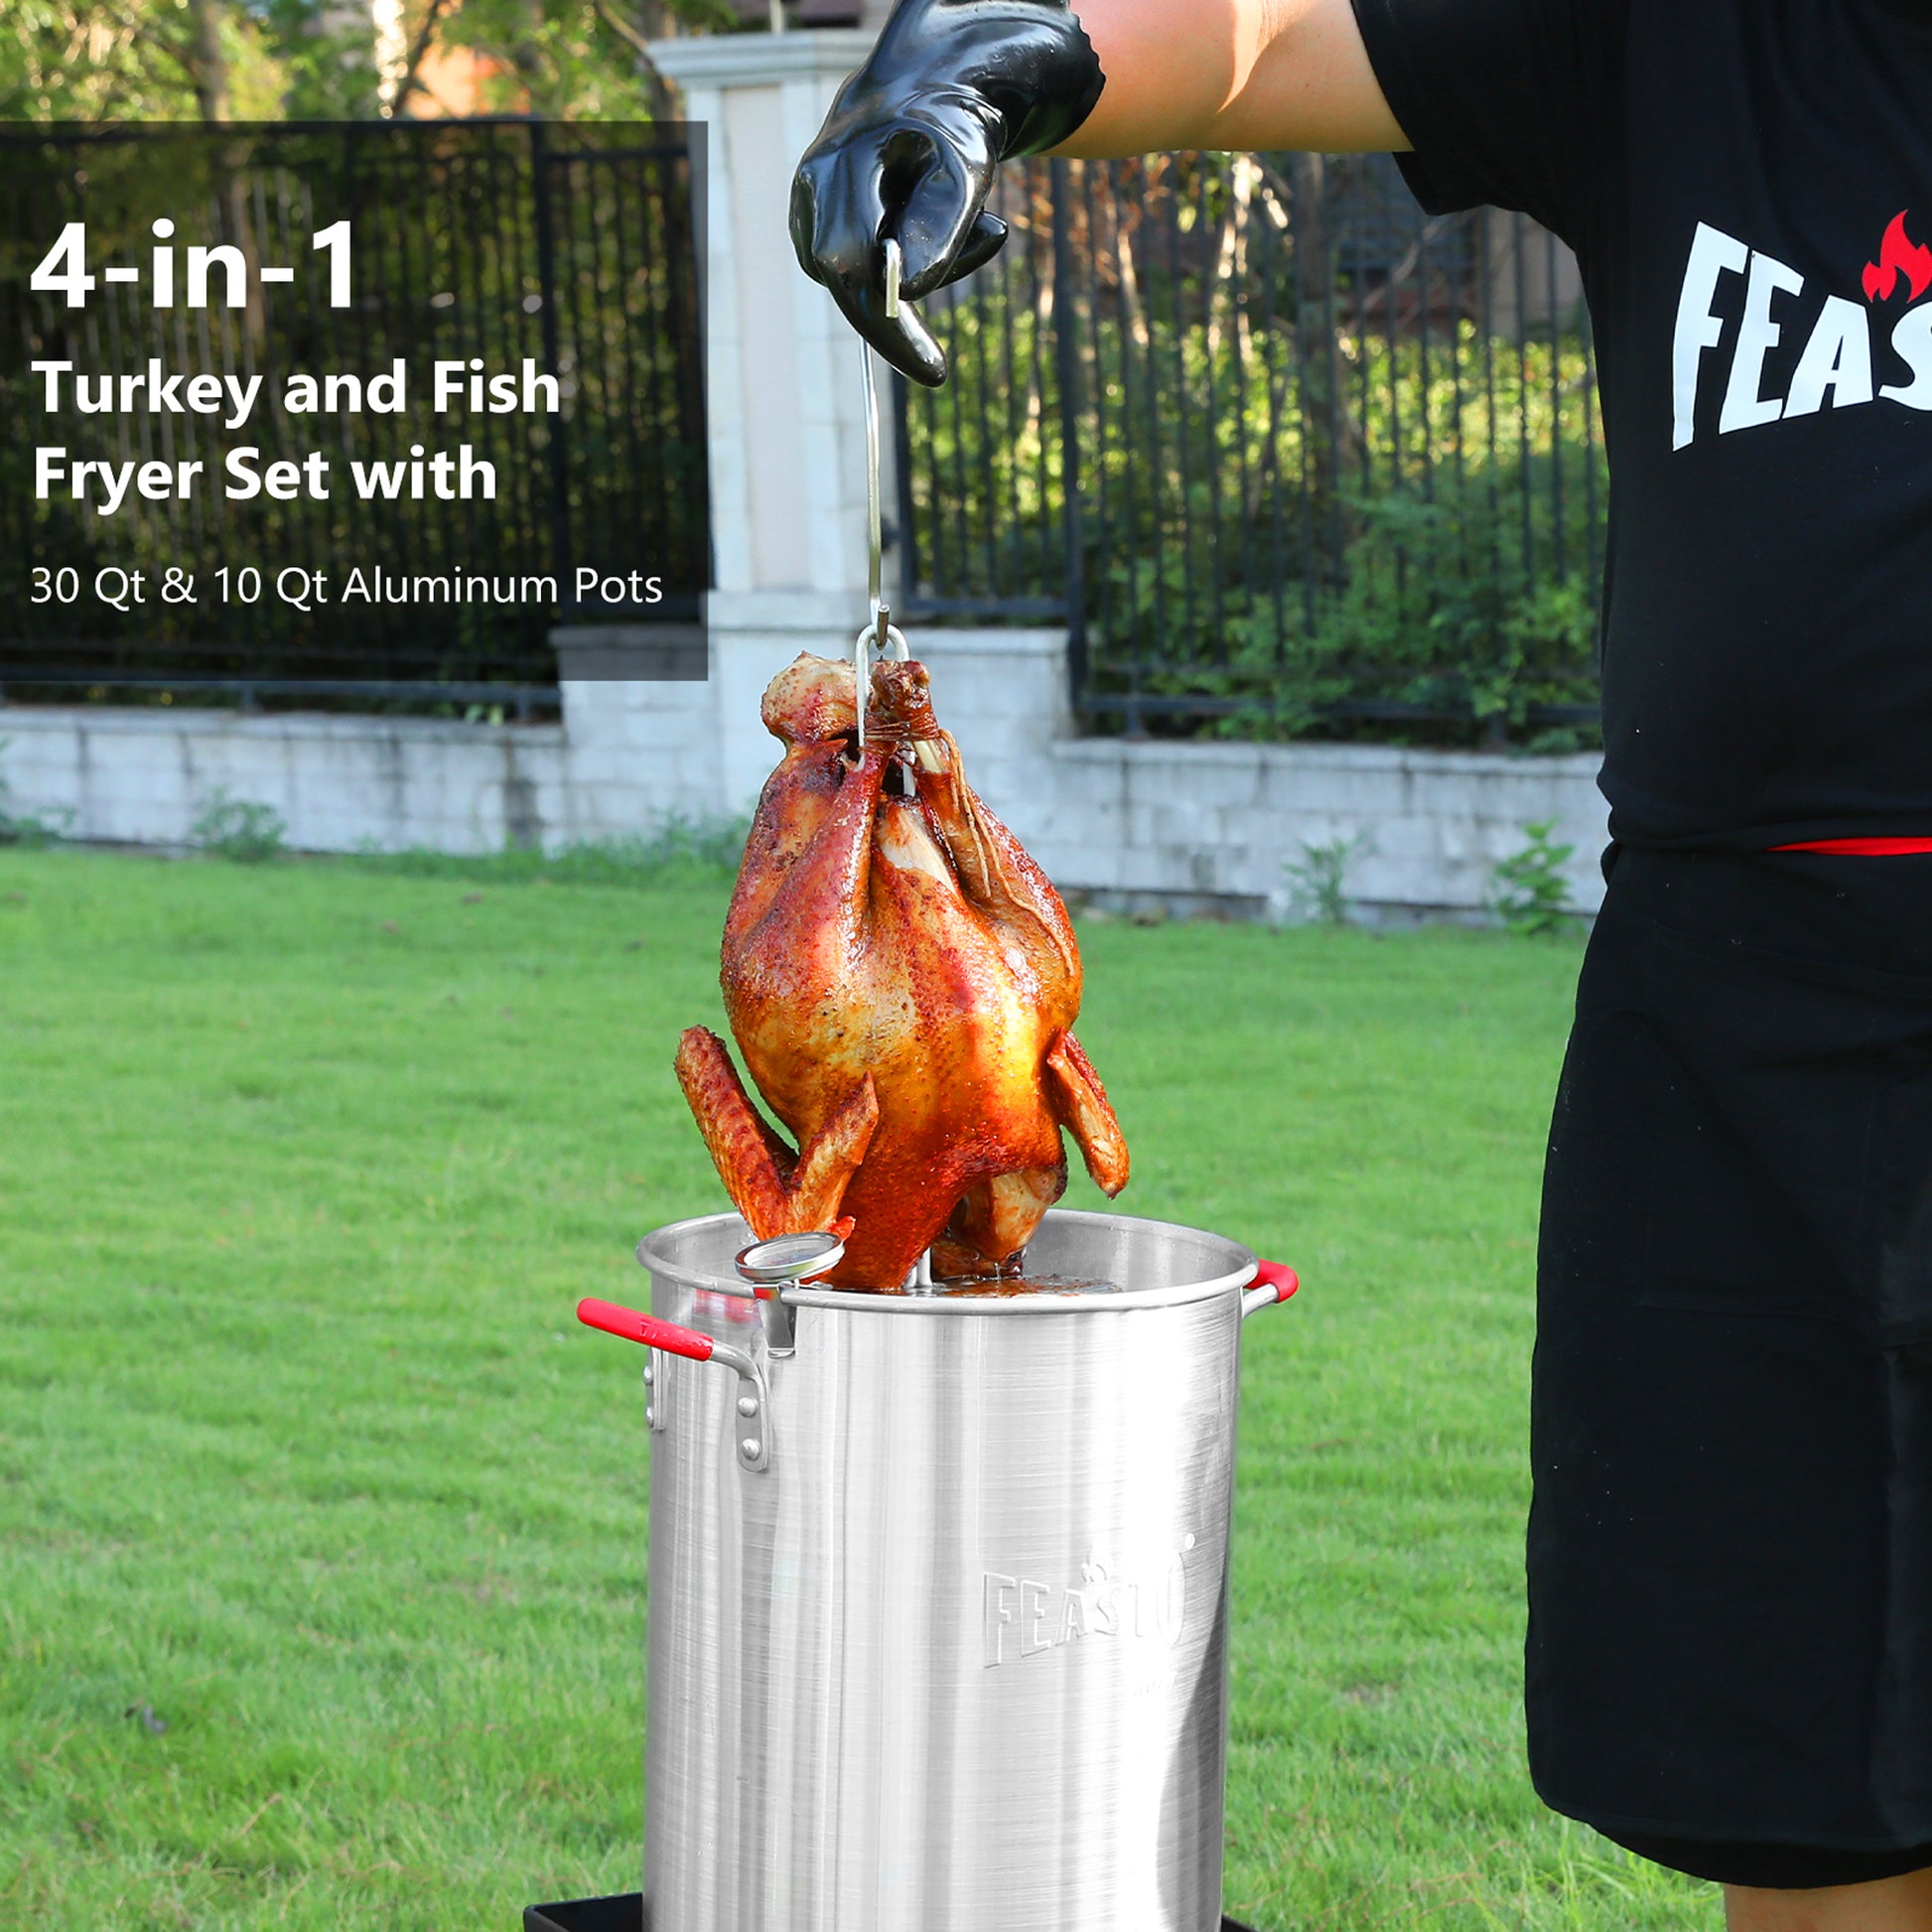 Turkey Cooker, 30 Qt., Aluminum Pot with Stand